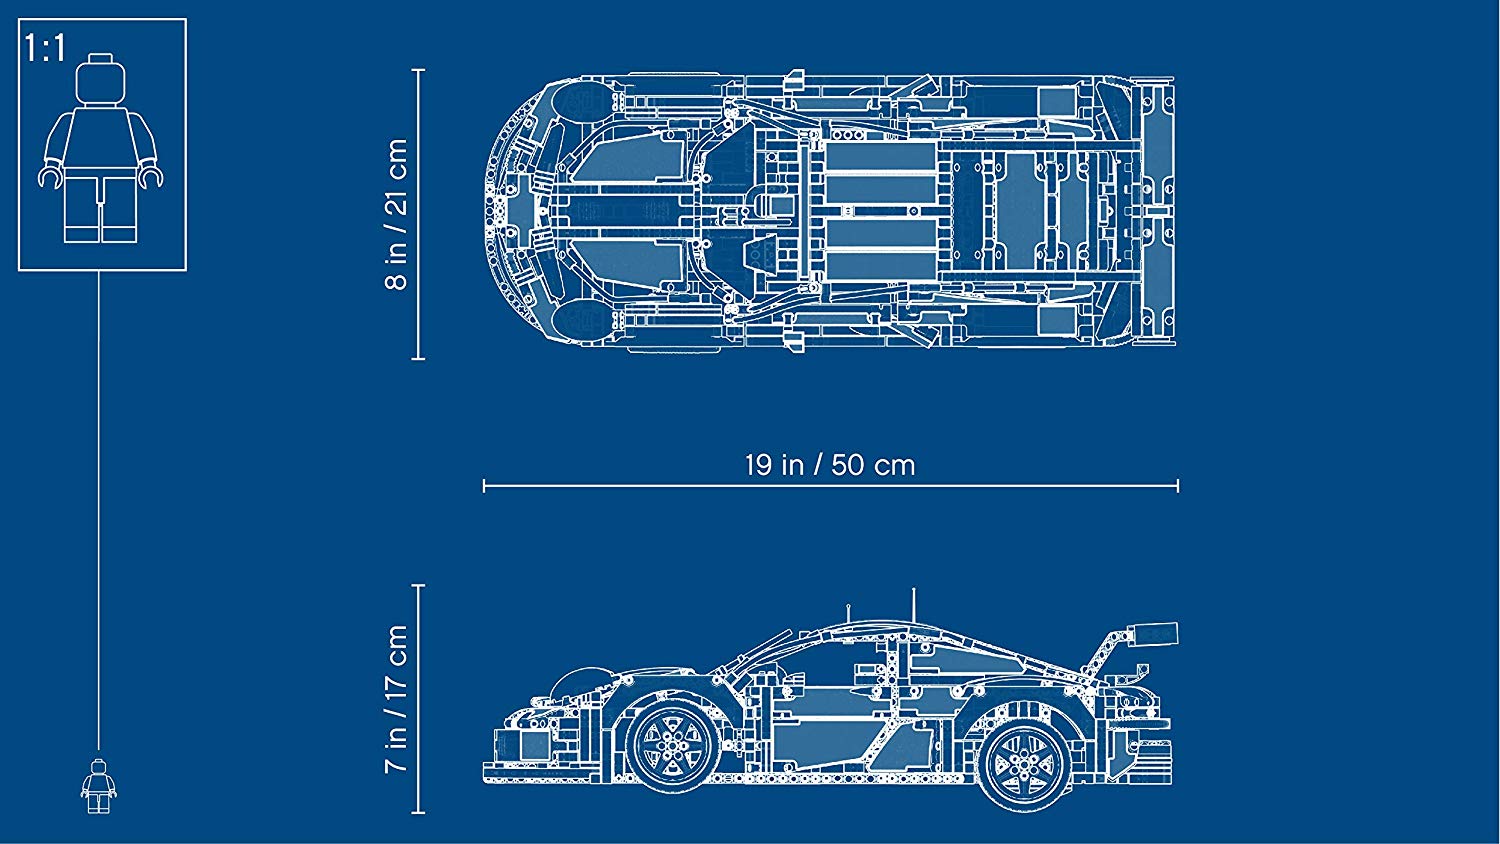 Technic™ Porsche 911 RSR